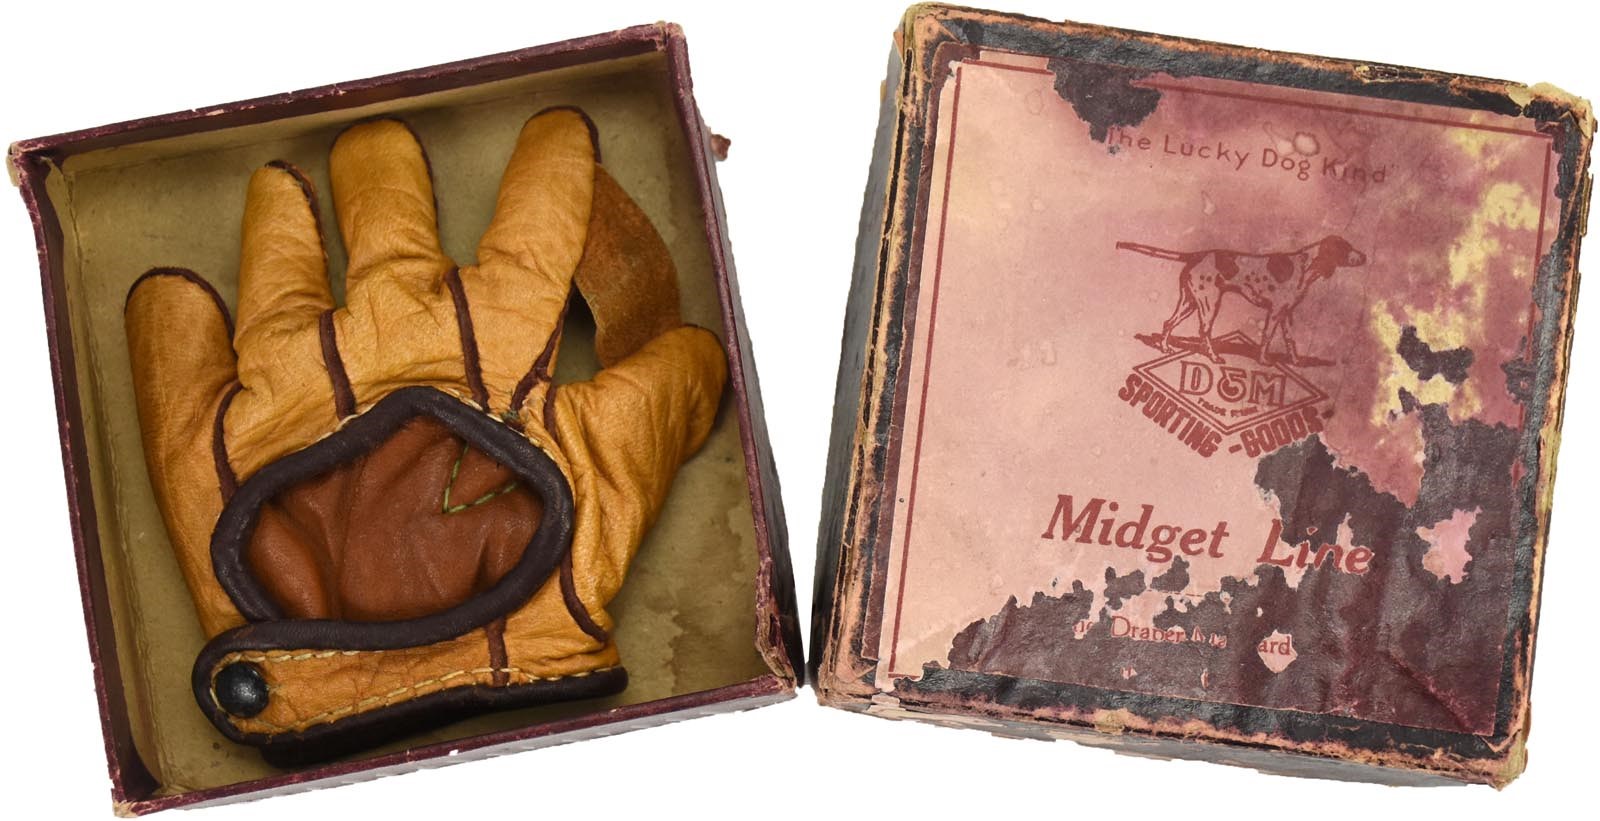 - 1930 "Midget Line" Draper & Maynard Salesman's Sample Baseball Glove in Box